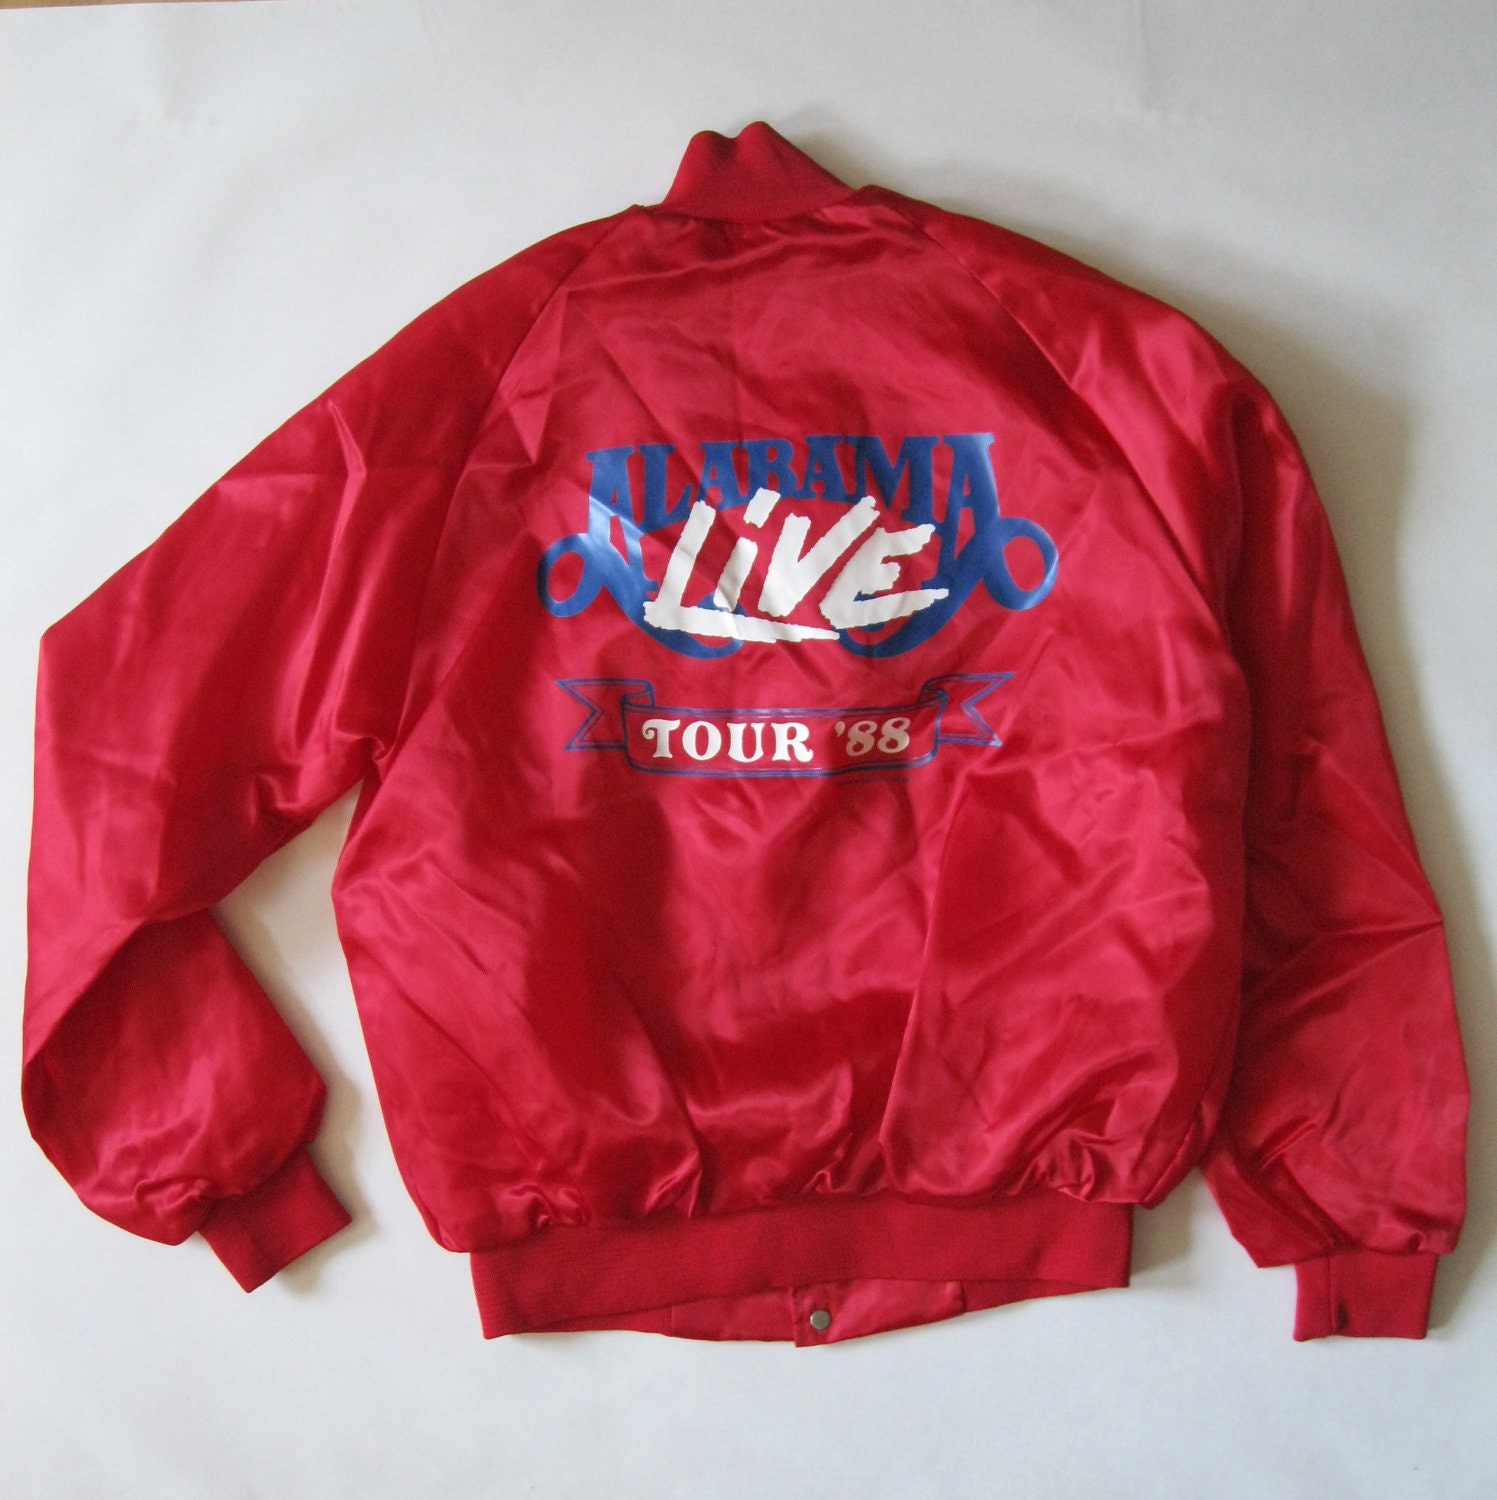 Vintage 1988 Alabama Live Tour jacket in red royal blue and